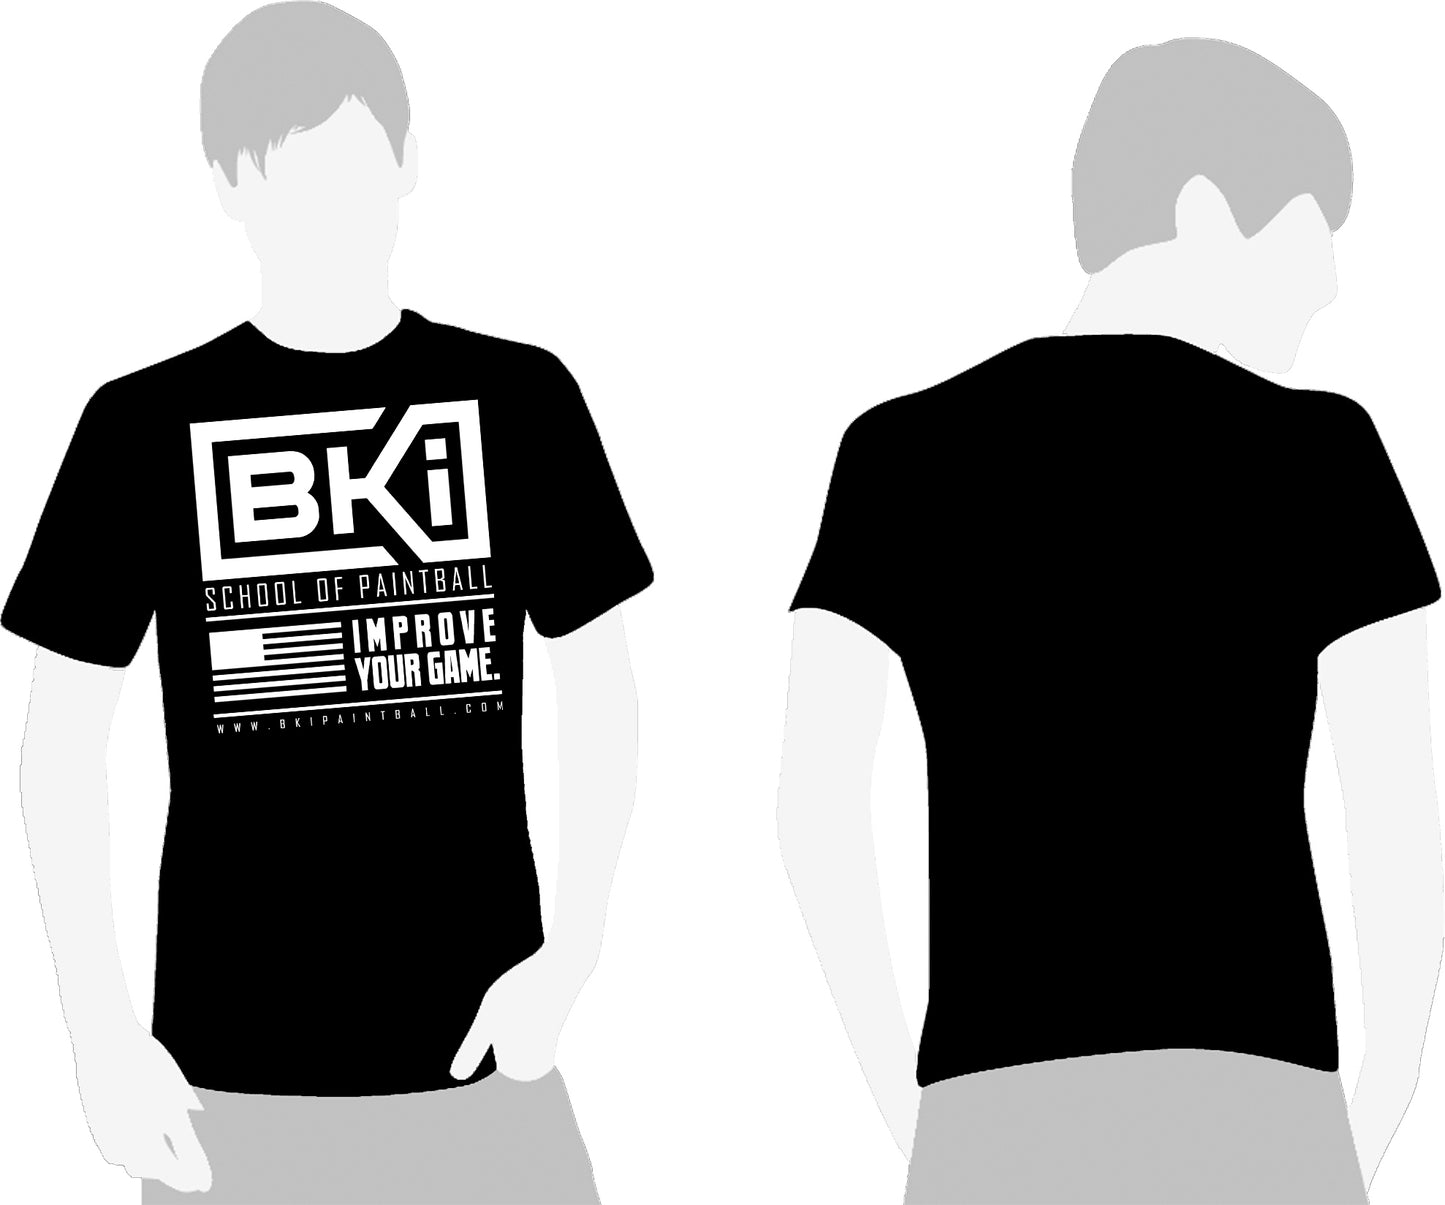 BKI Improve Your Game T-Shirt